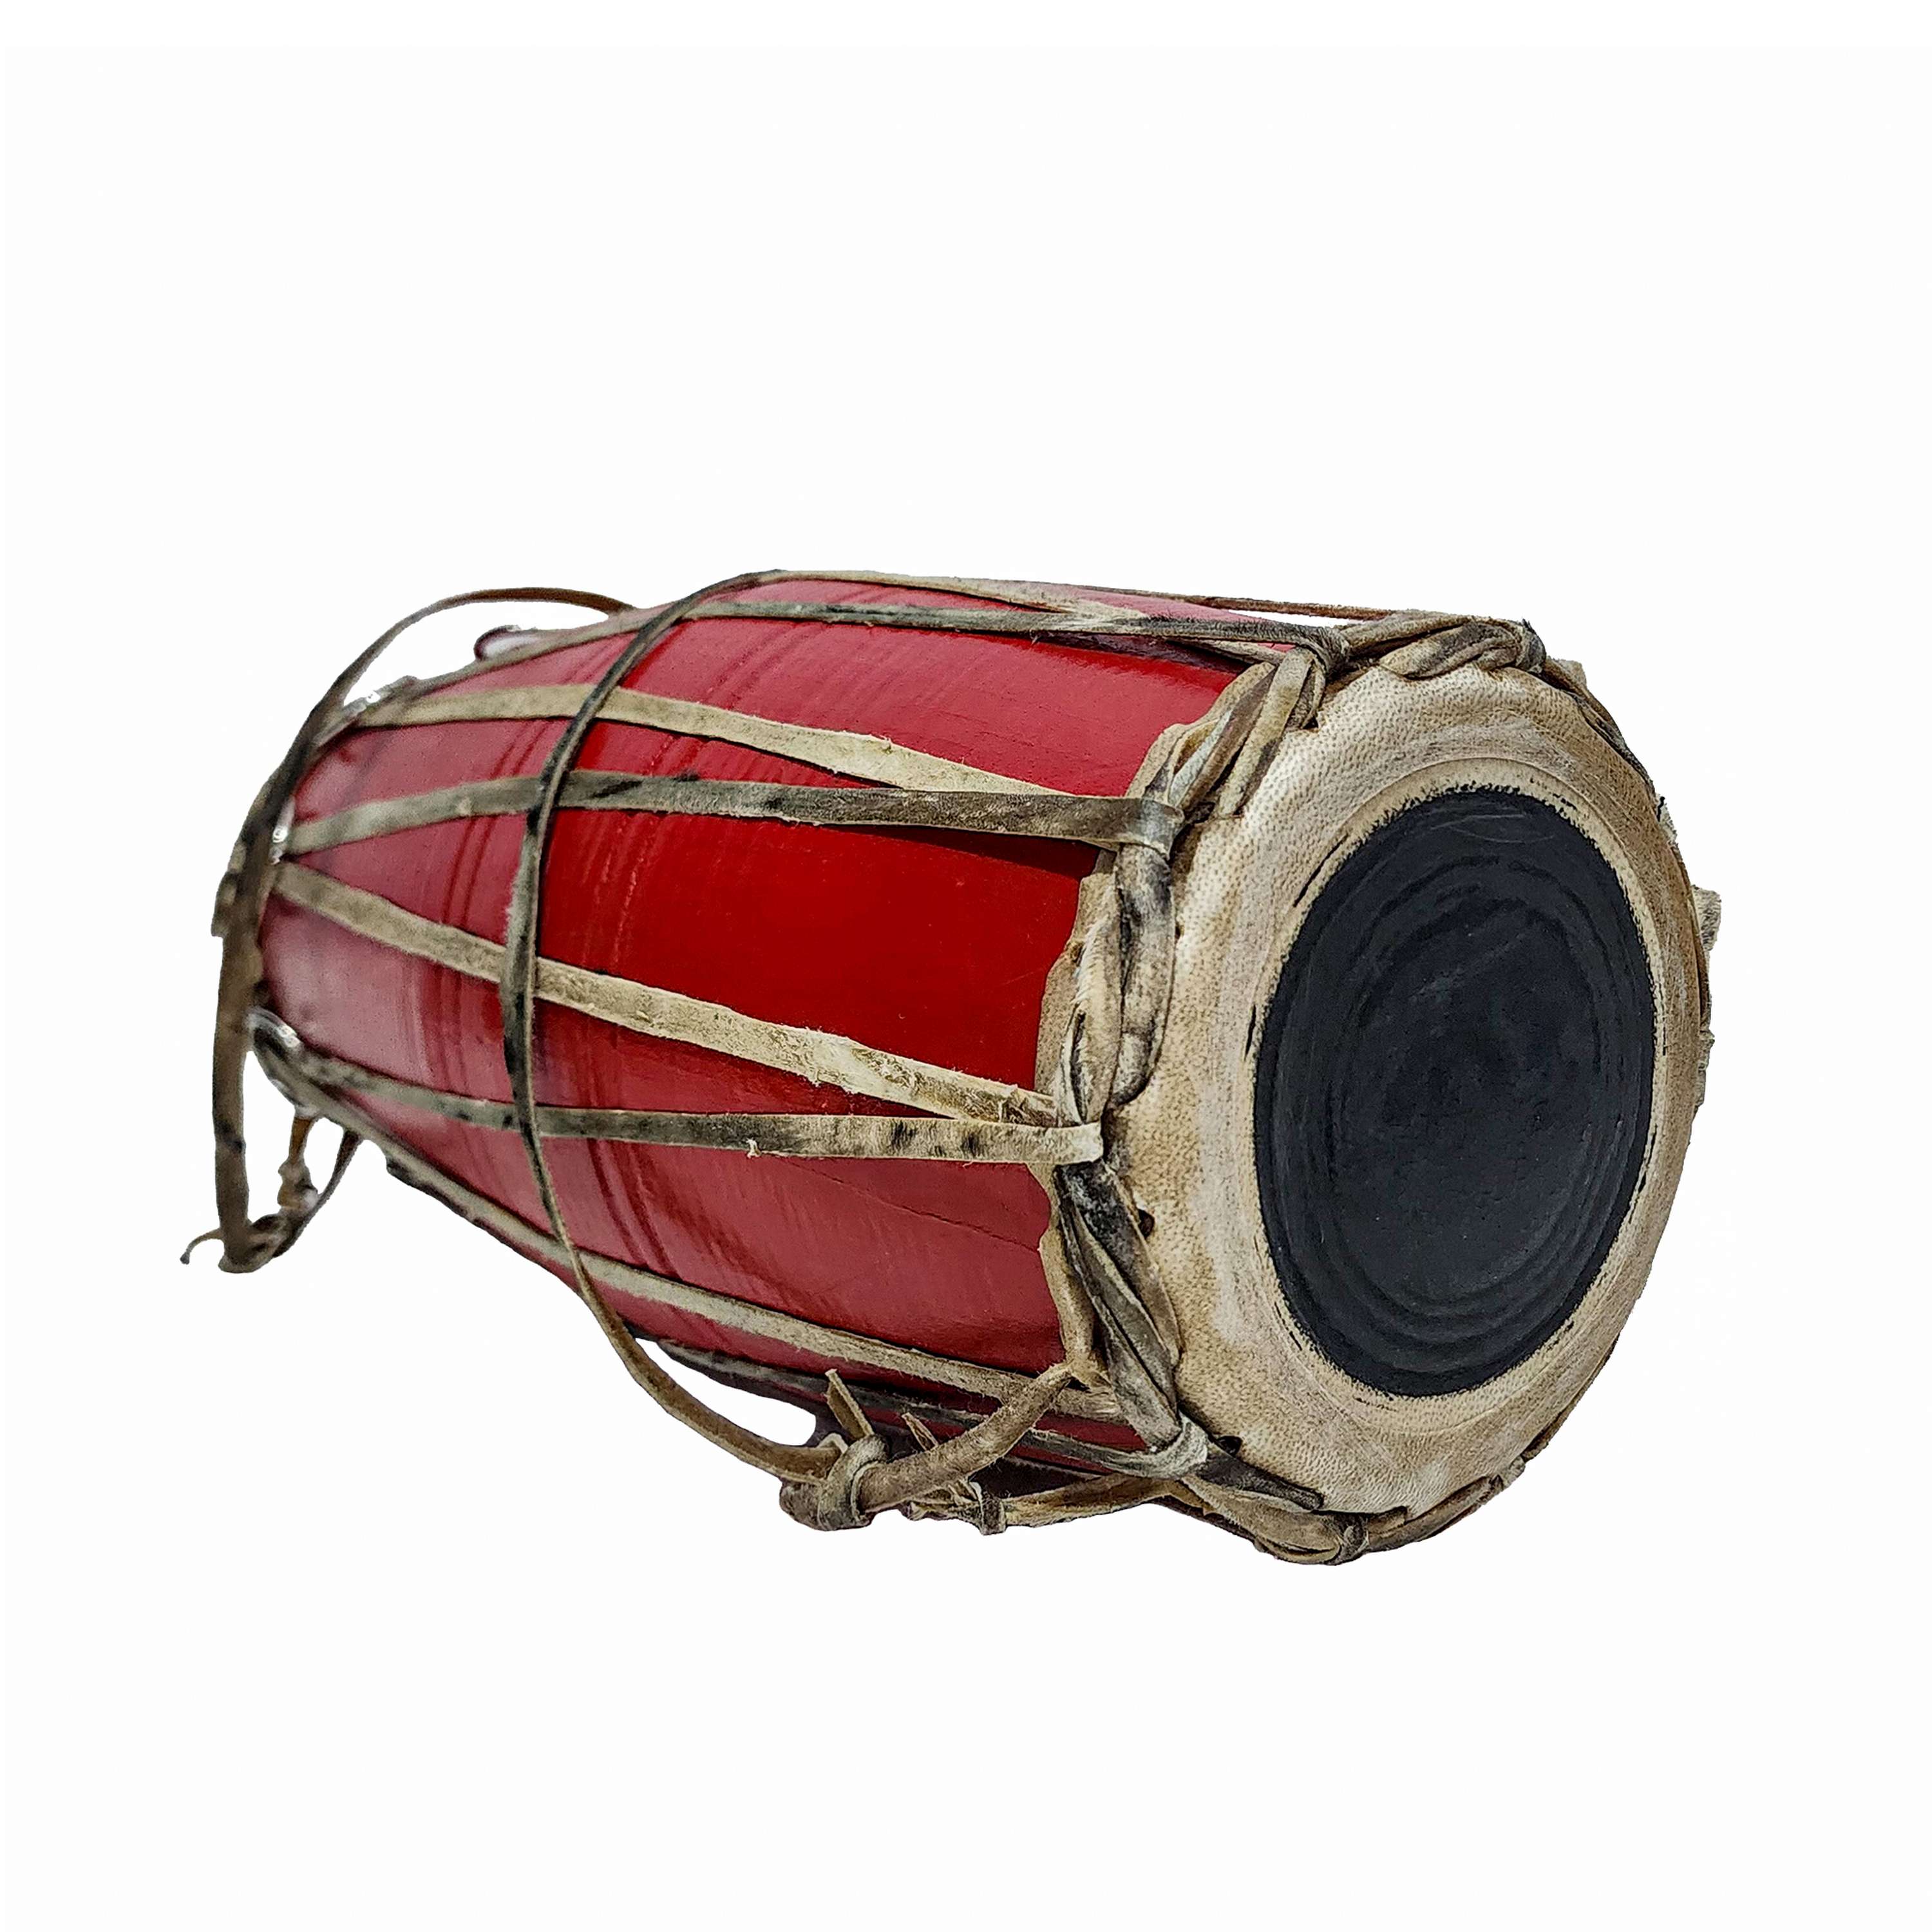 Nepali Folk Musical Instrument Jali Madal, professional